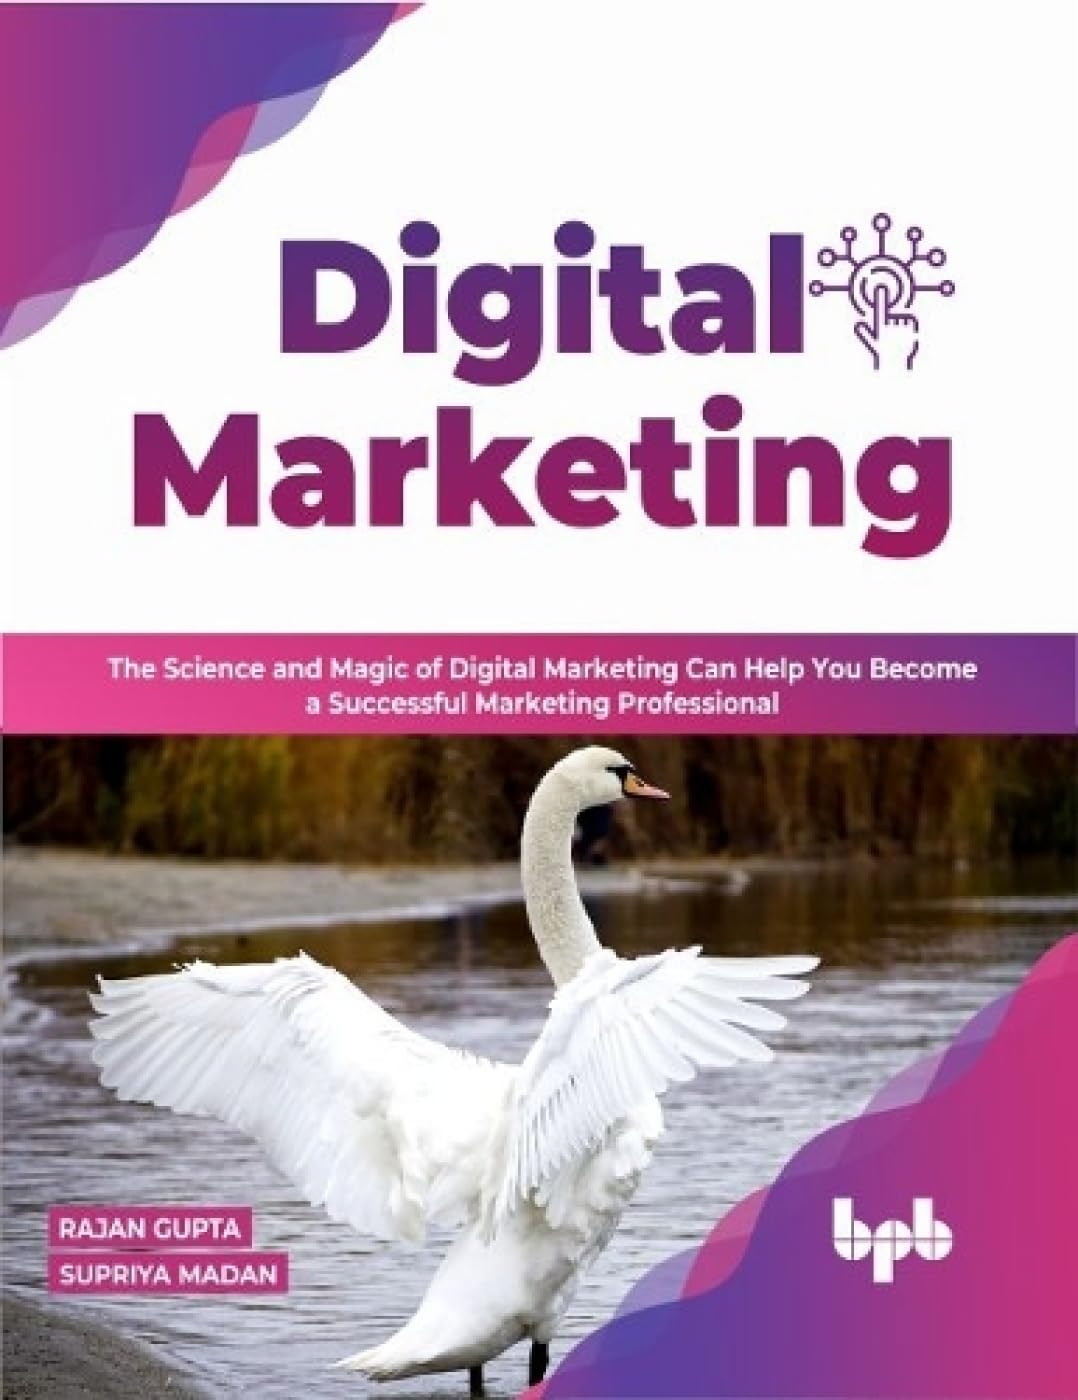 Digital Marketing: The Science and Magic of Digital Marketing Can Help You Become a Successful Marketing Professional by  Rajan Gupta Supriya Madan